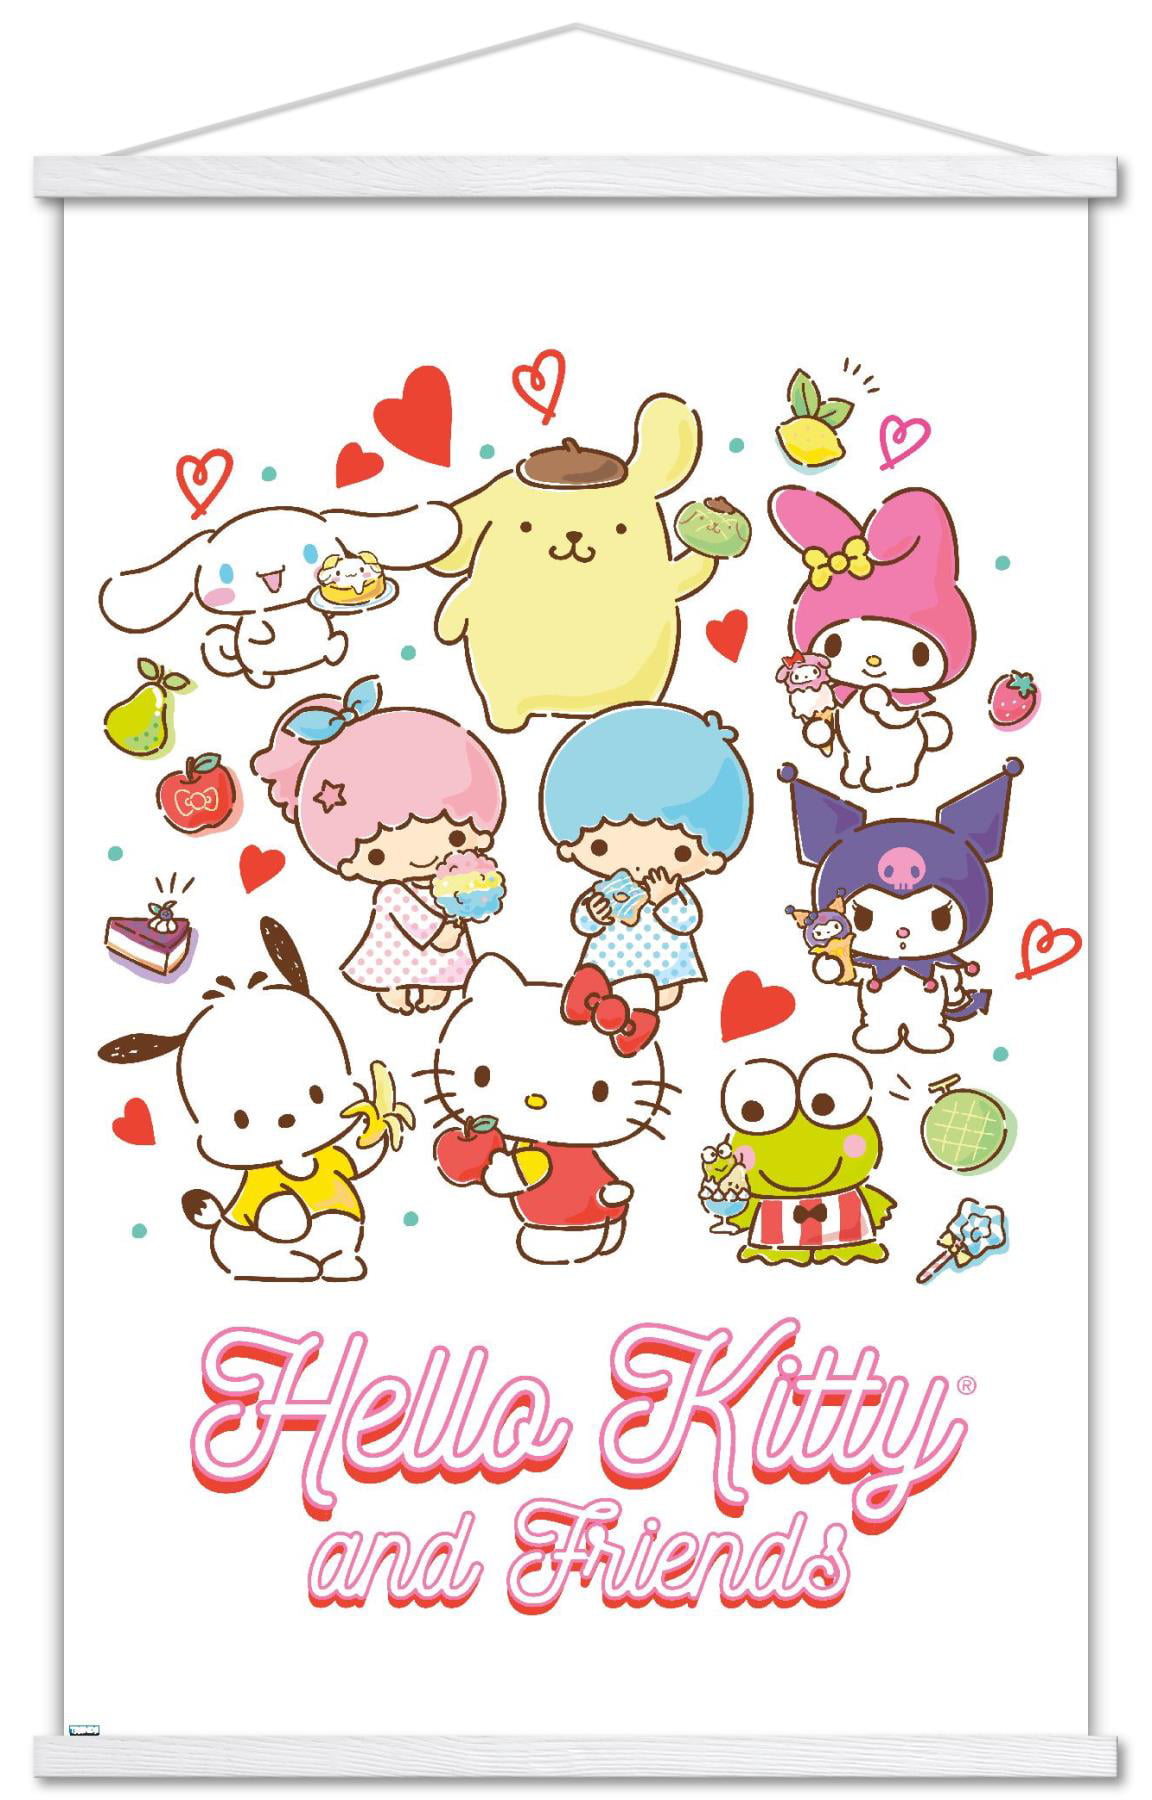 Kawaii FREE Sanrio wallpaper!!